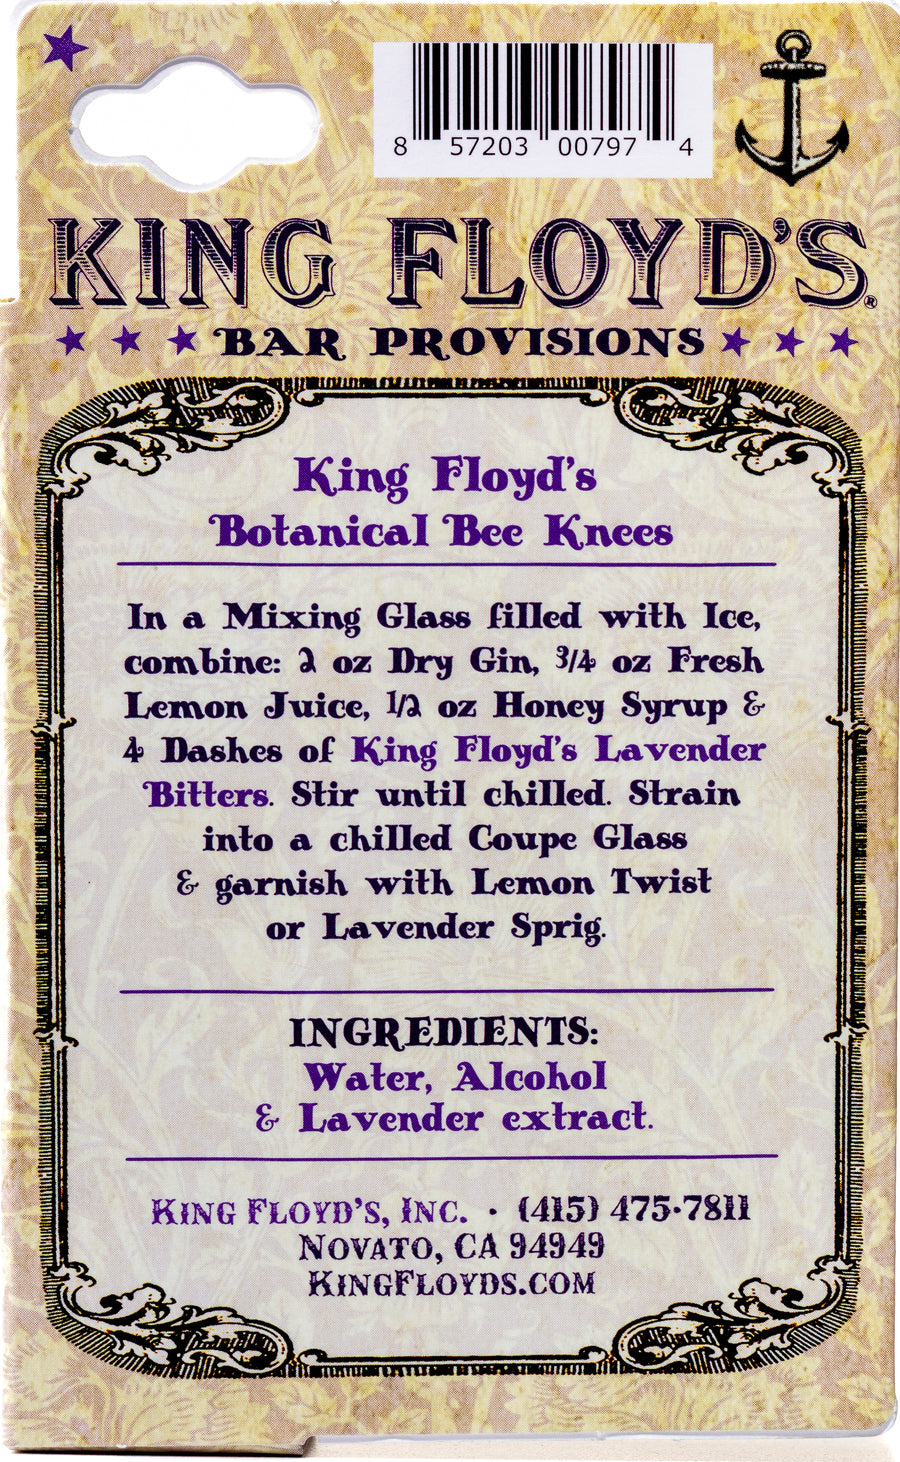 KING FLOYD'S Lavender Bitters